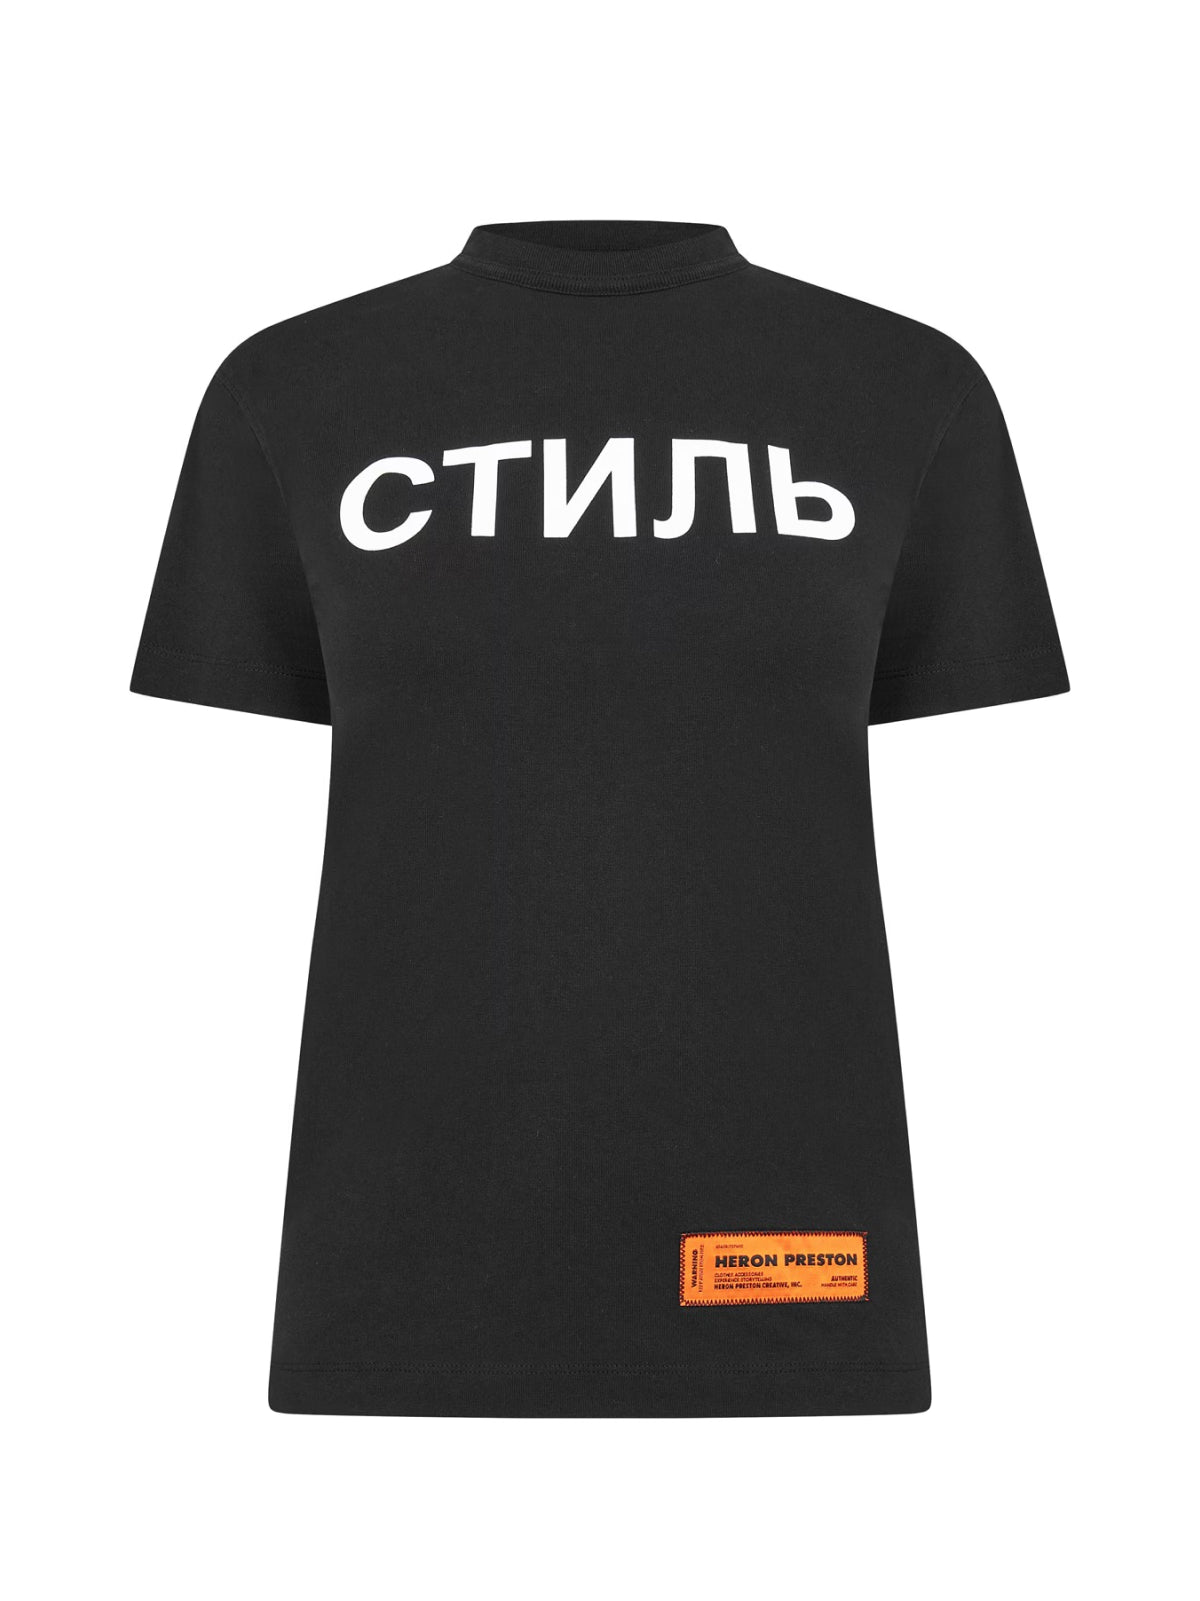 CTNMB Logo T-Shirt